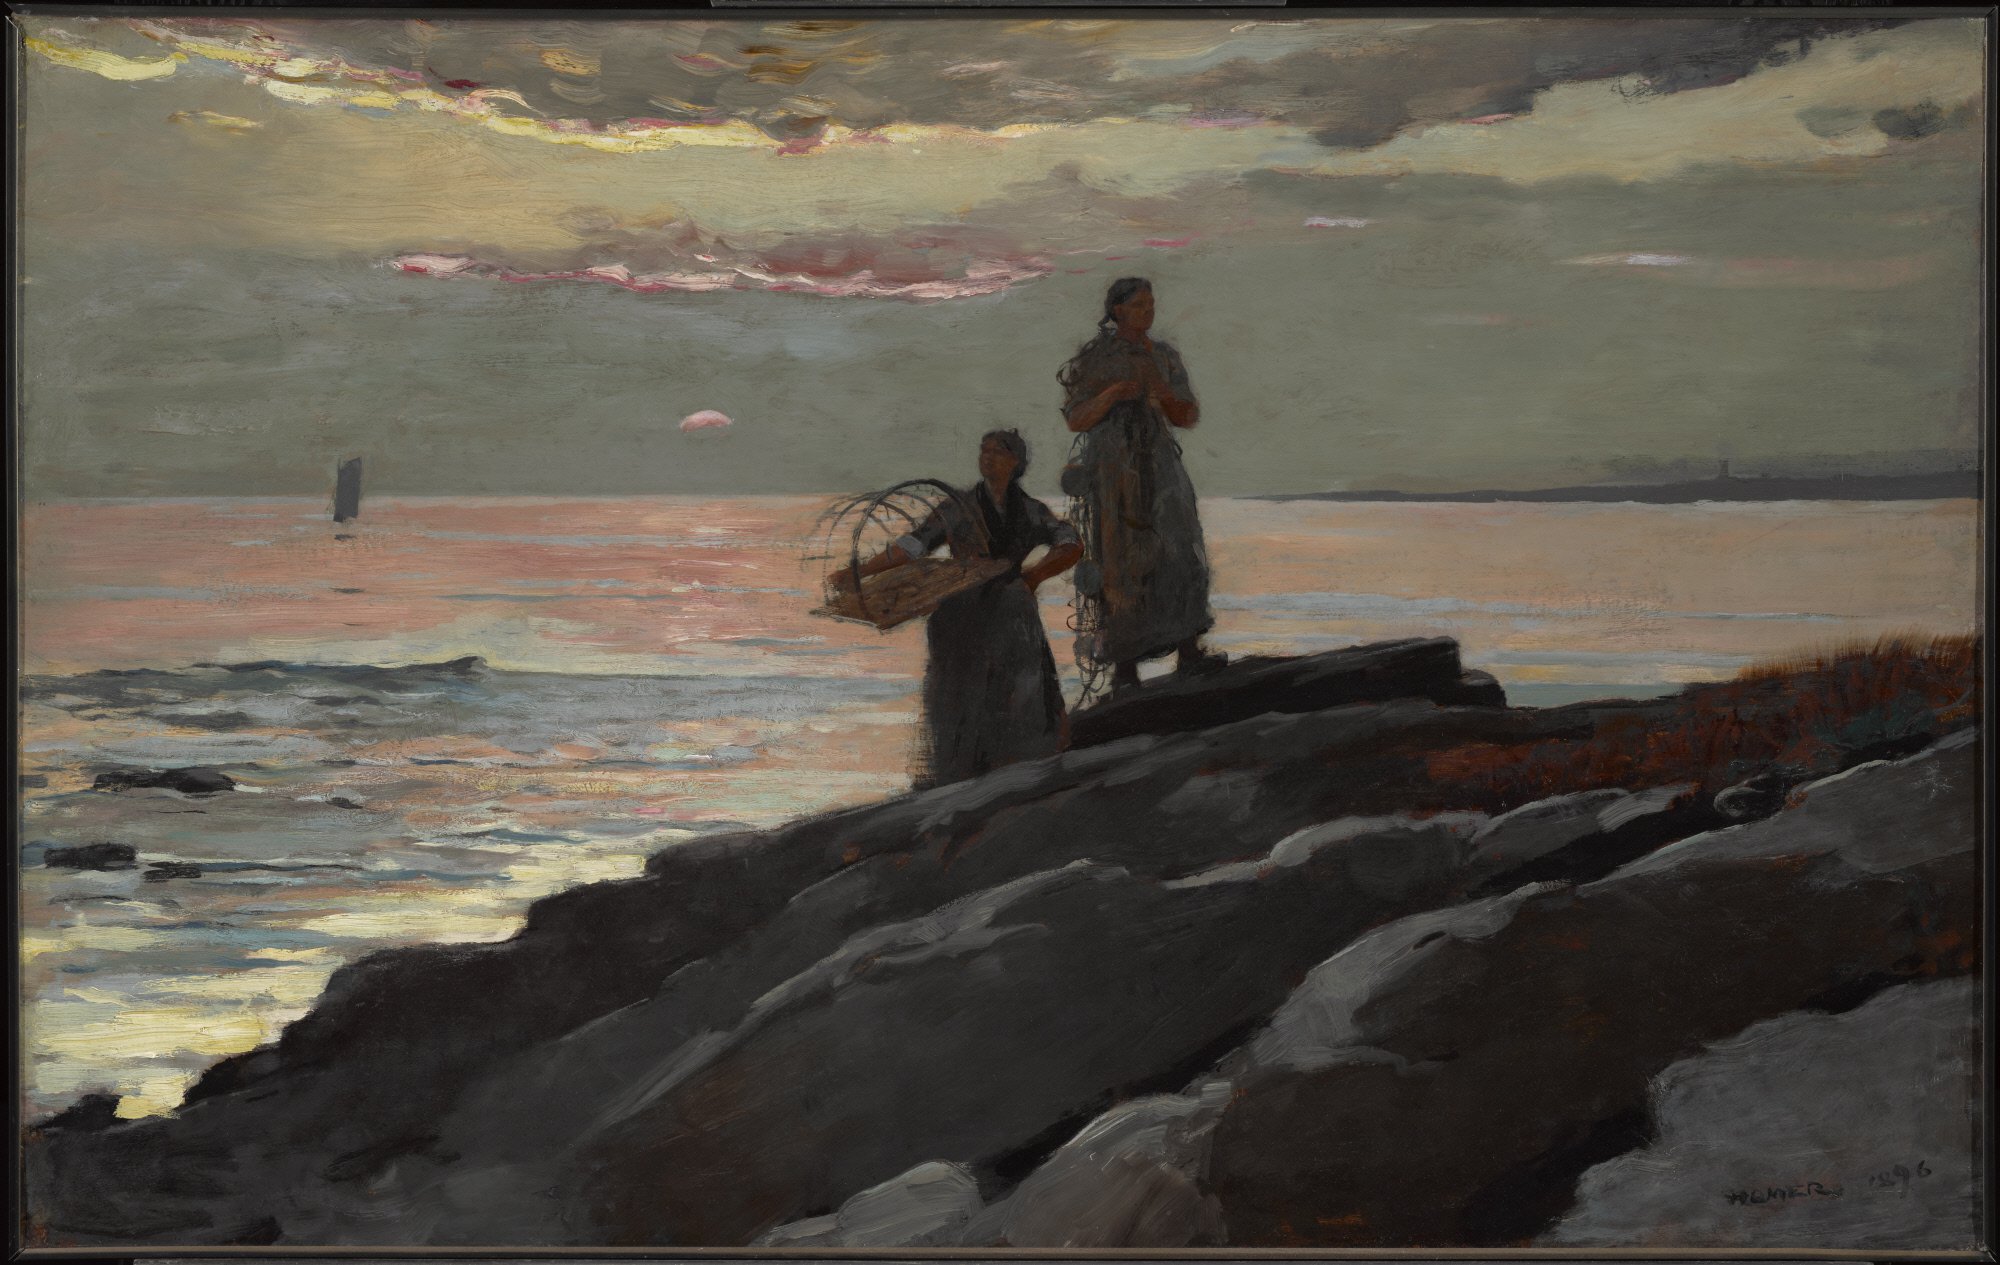 Sunset, Saco Bay by Winslow Homer - 1896 - 60.5 x 96.4 cm The Clark